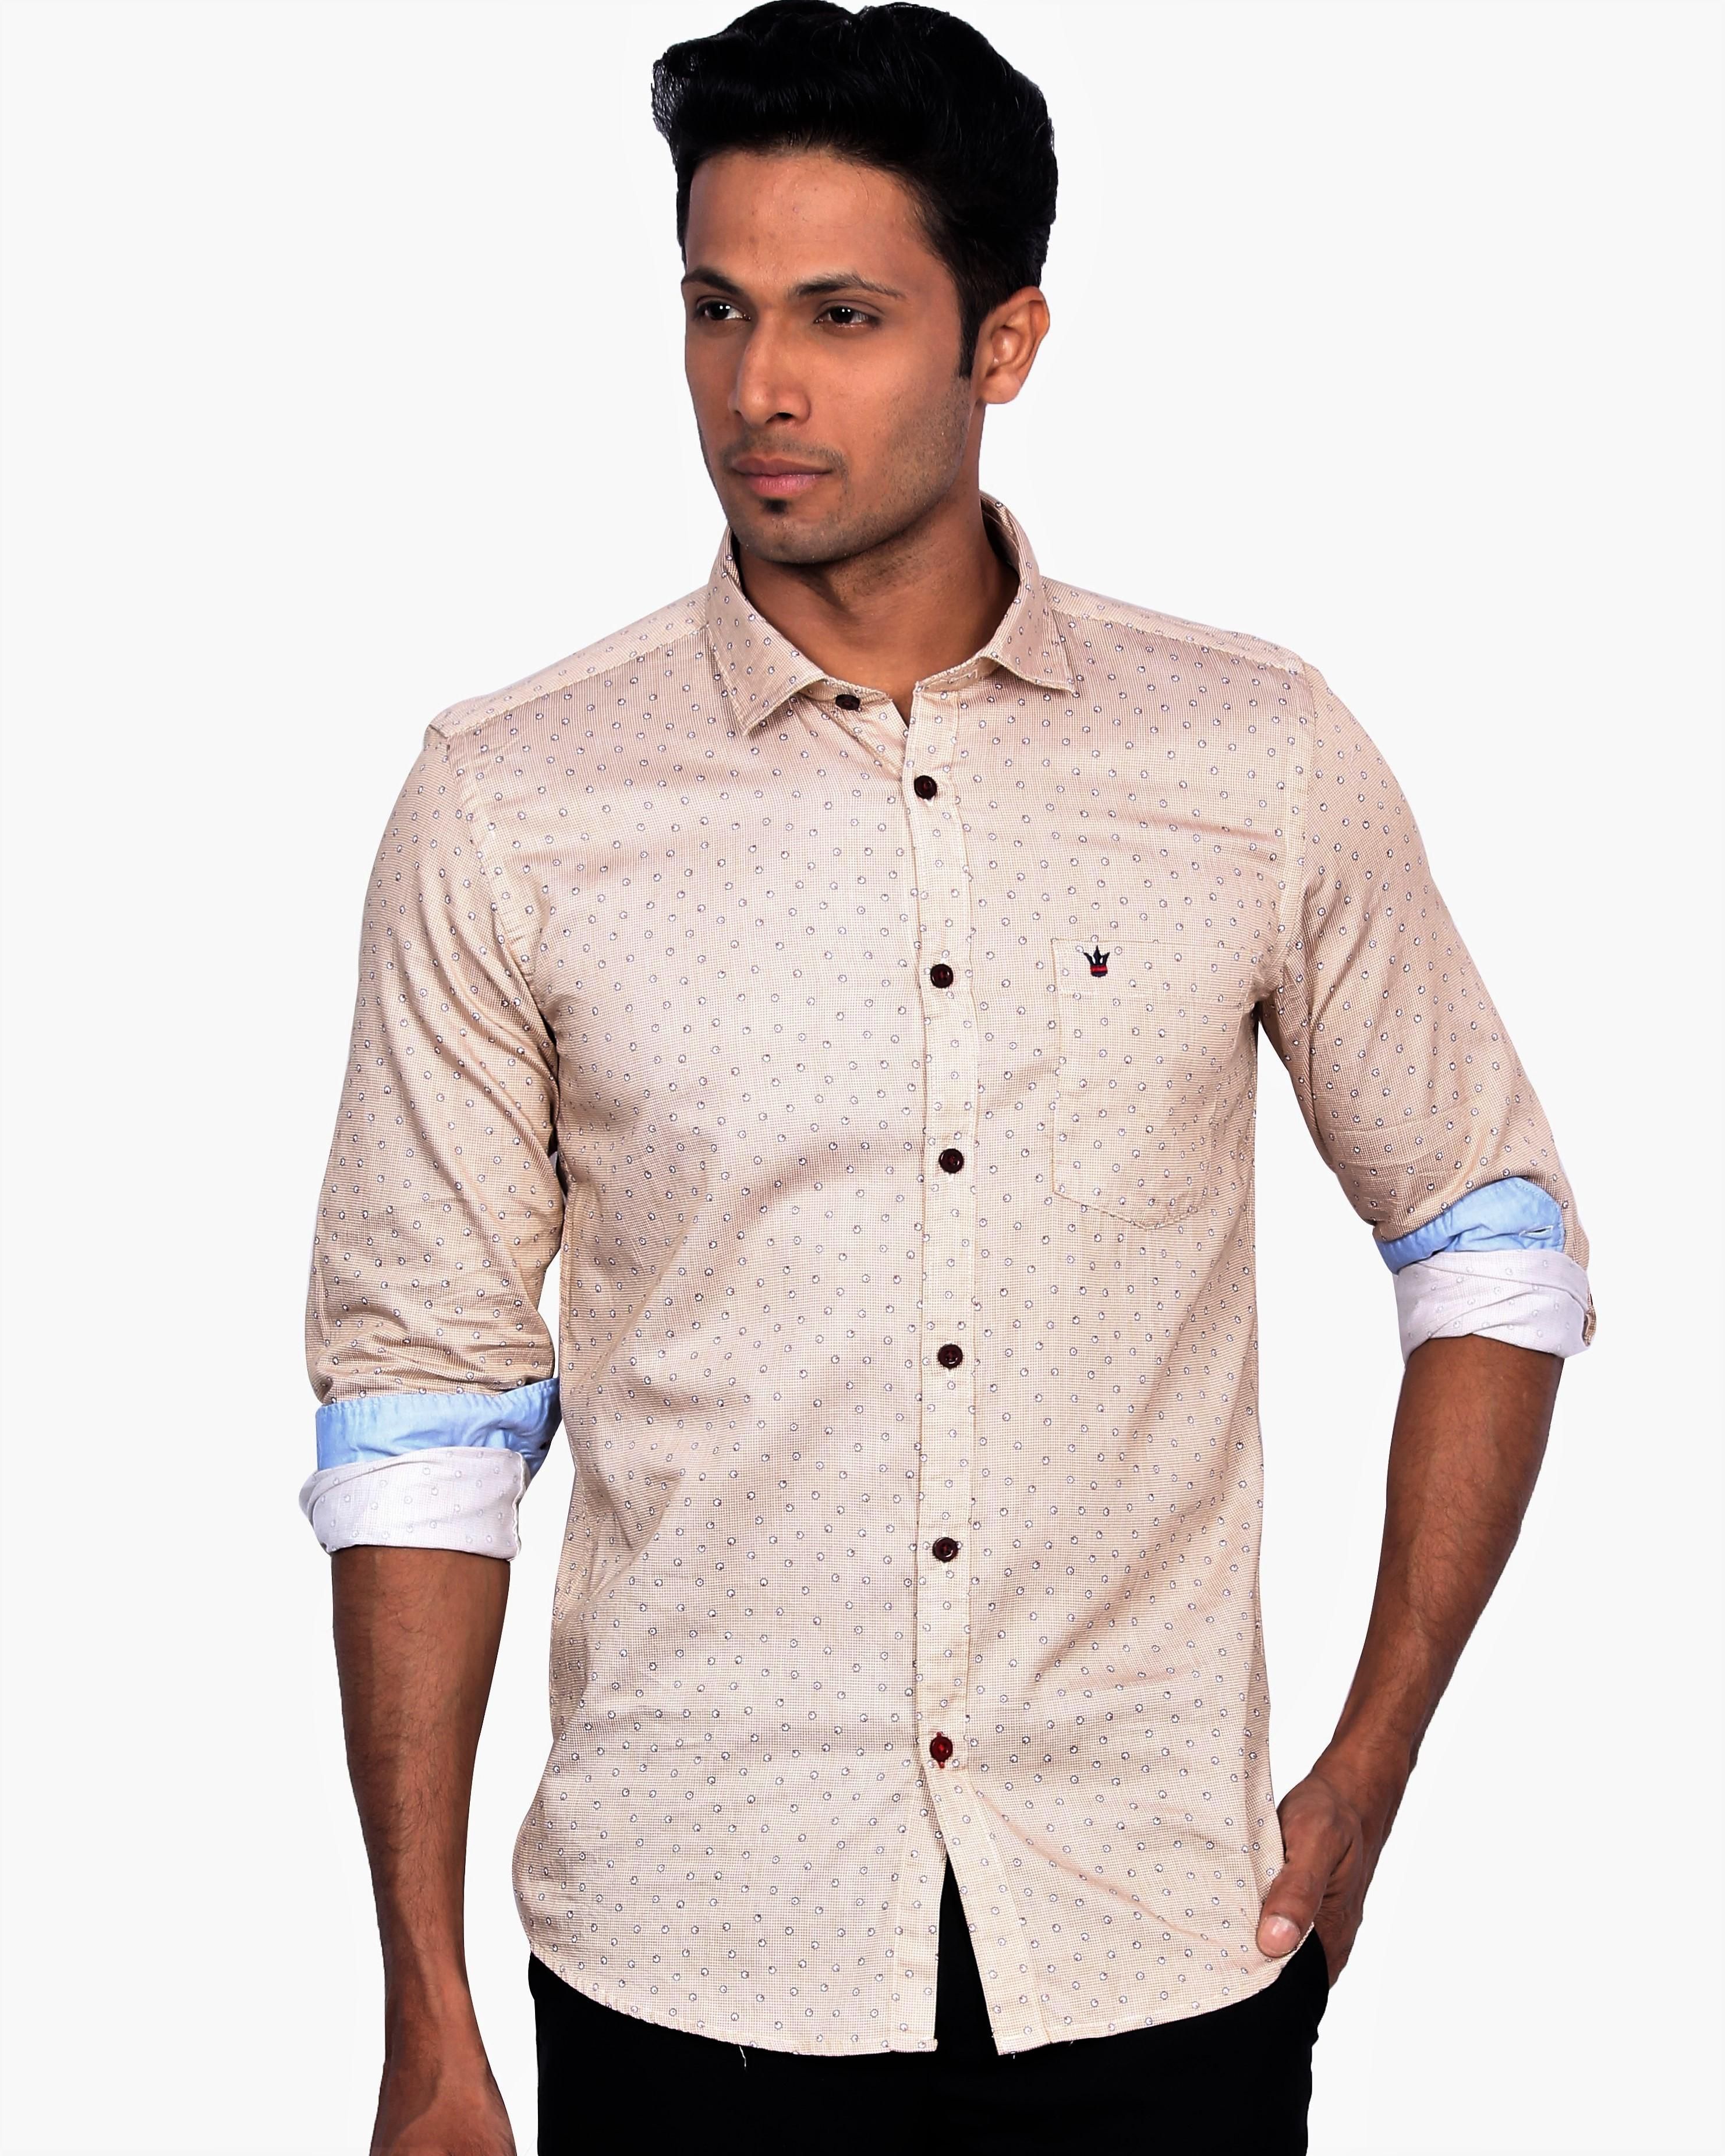 D'Indian CLUB Premium Cotton Men's Full Sleeve Casual Brown Printed Shirt Size XL